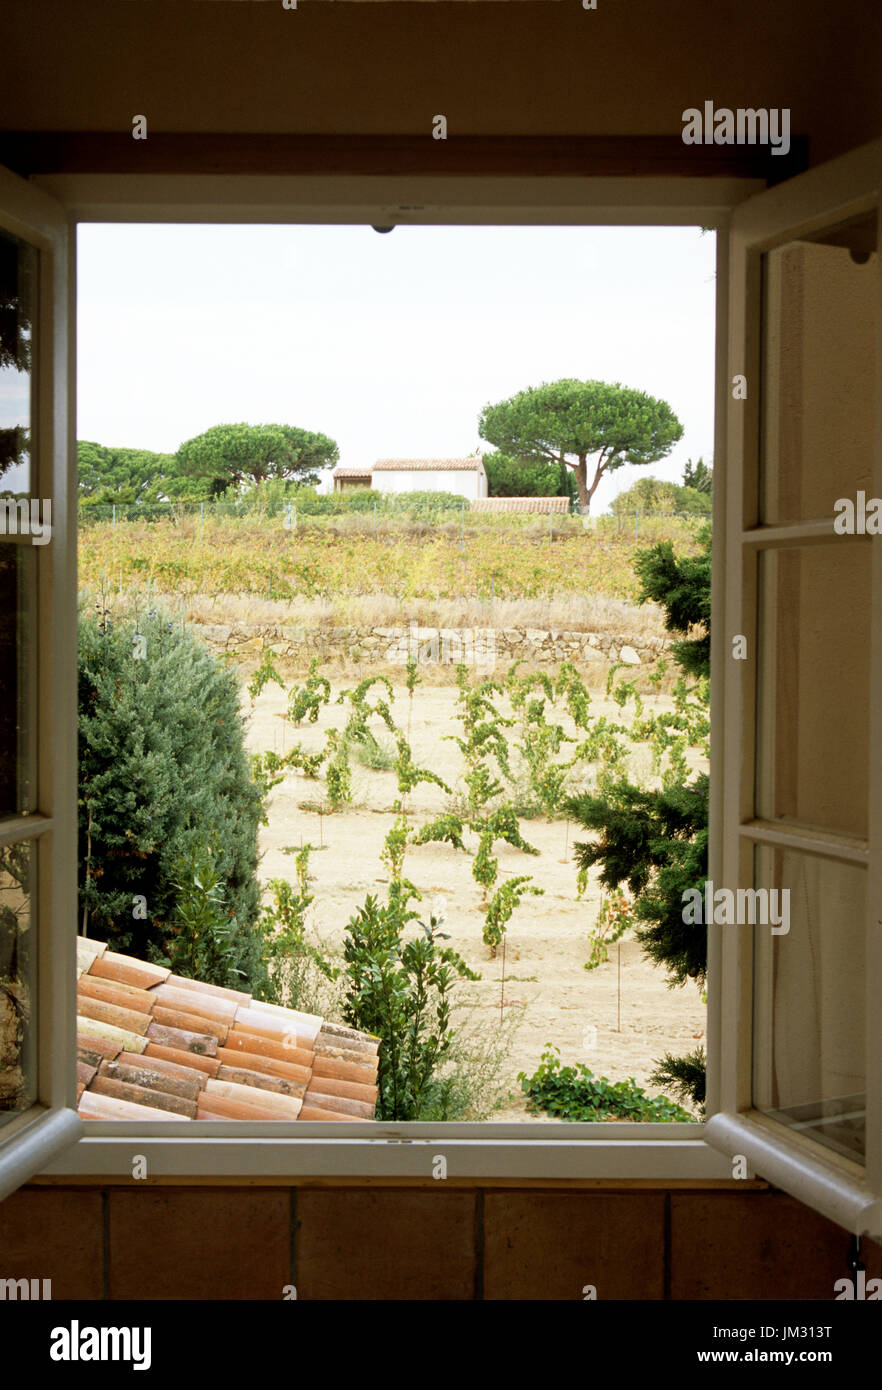 View through open window to vegetable garden Stock Photo